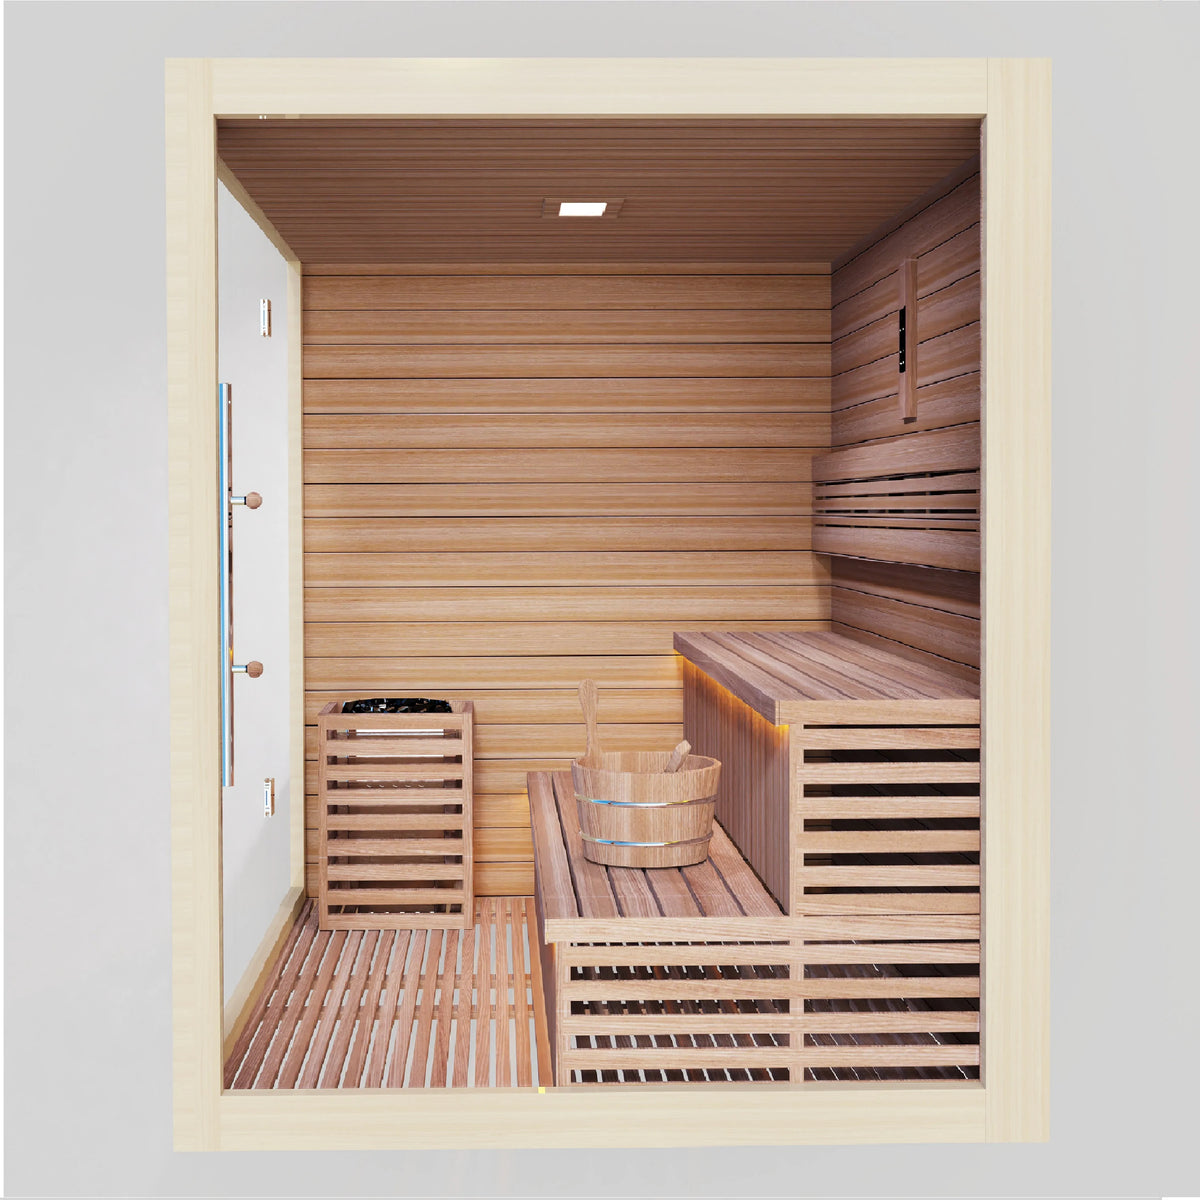 2023 "Kuusamo Edition" 6 Person Indoor Traditional Steam Sauna / Canadian Red Cedar Interior